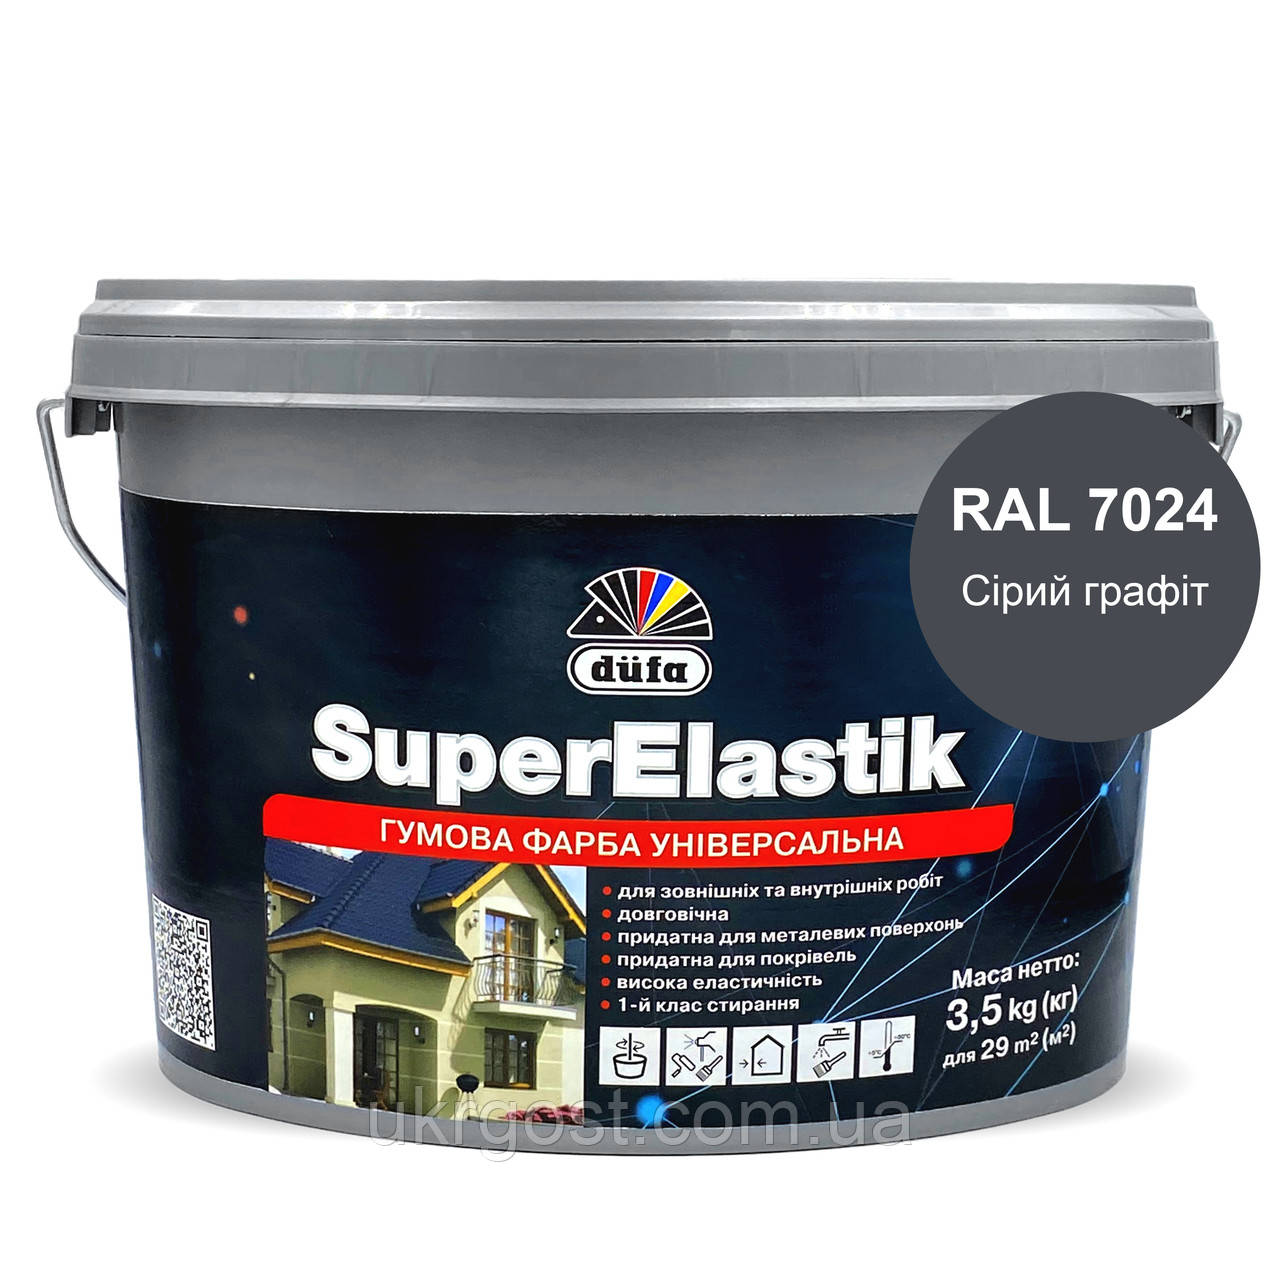 Гумова фарба універсальна Dufa SuperElastik RAL 7024 Сірий графіт  мат 12 кг